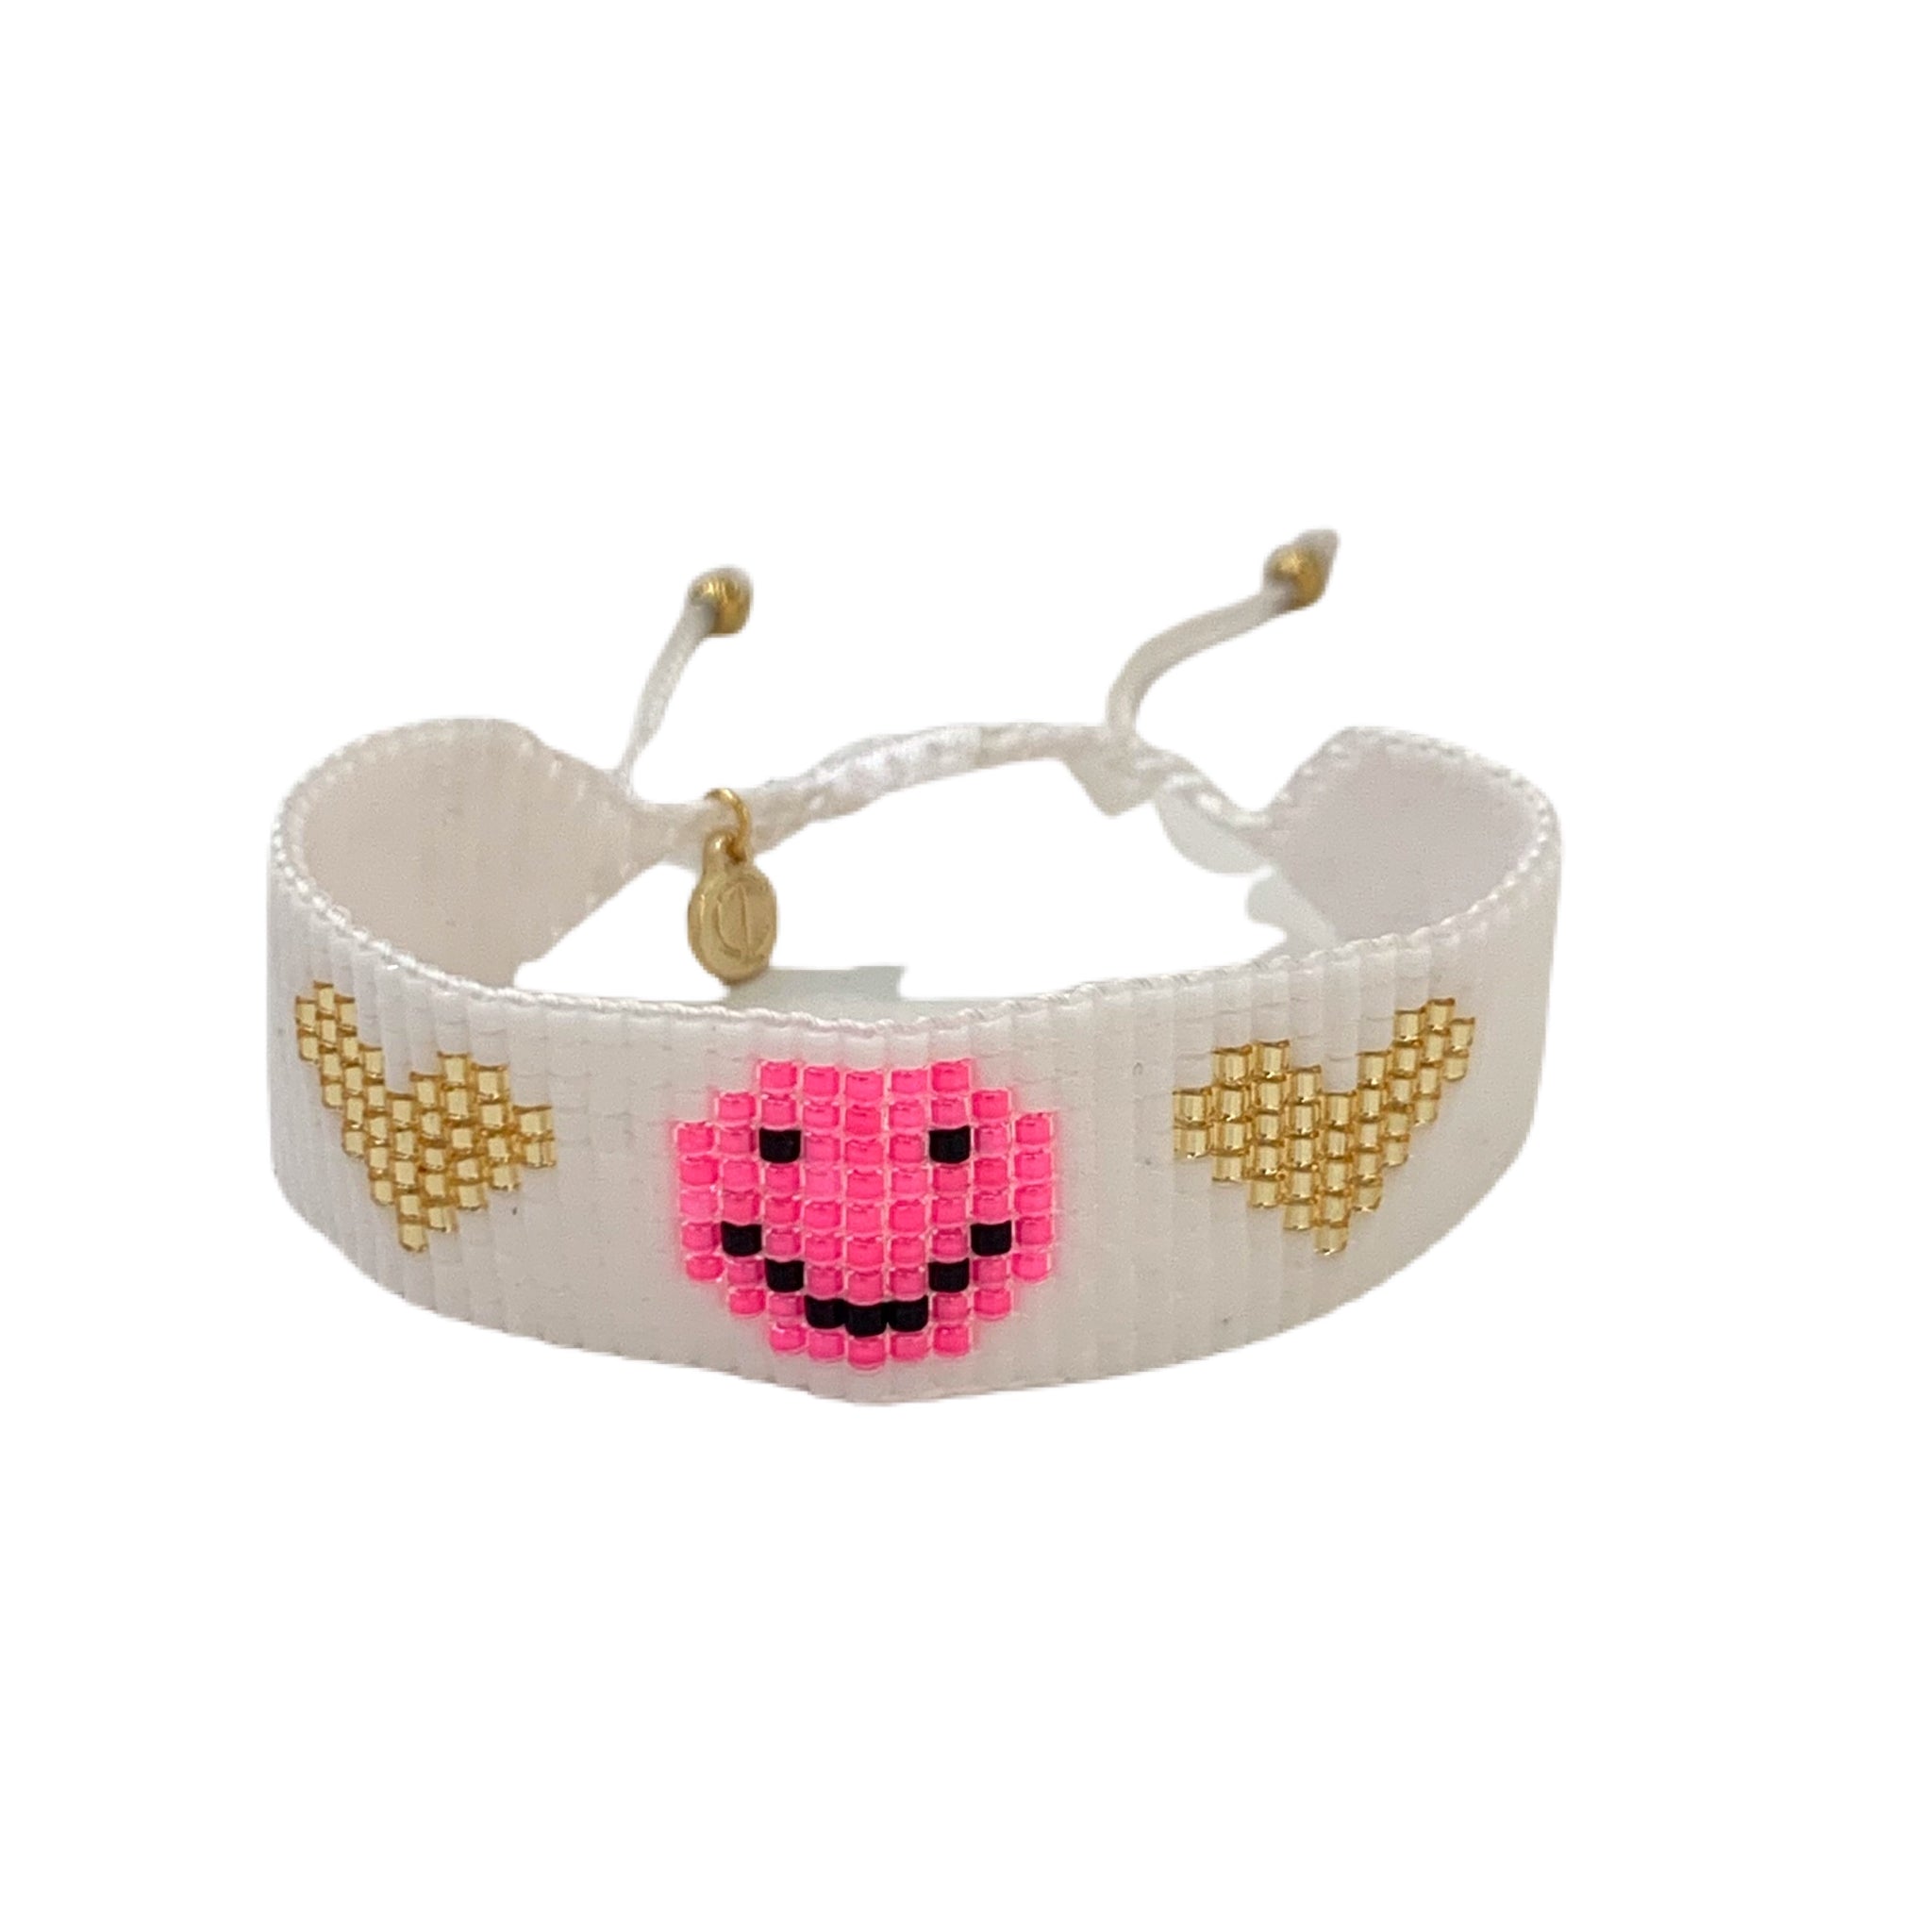 Caryn Lawn Smile Face Friendship Bracelet.